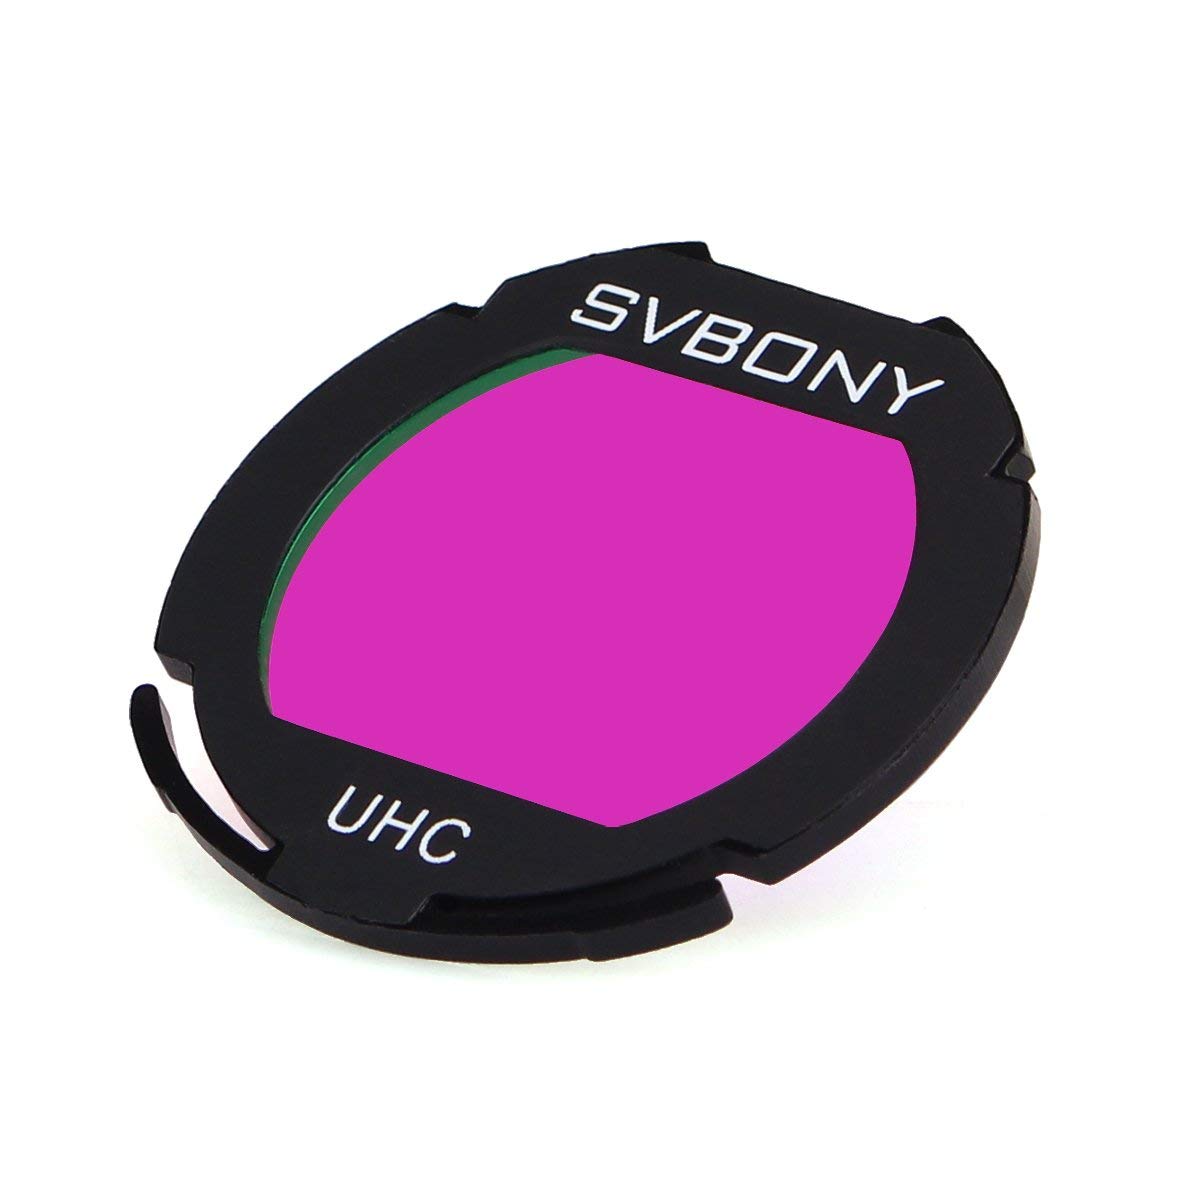 Svbony Teleskop Filter 1,25 Zoll, UHC Filter EOS, Lichtverschmutzung Filter für CCD Kameras DSLR